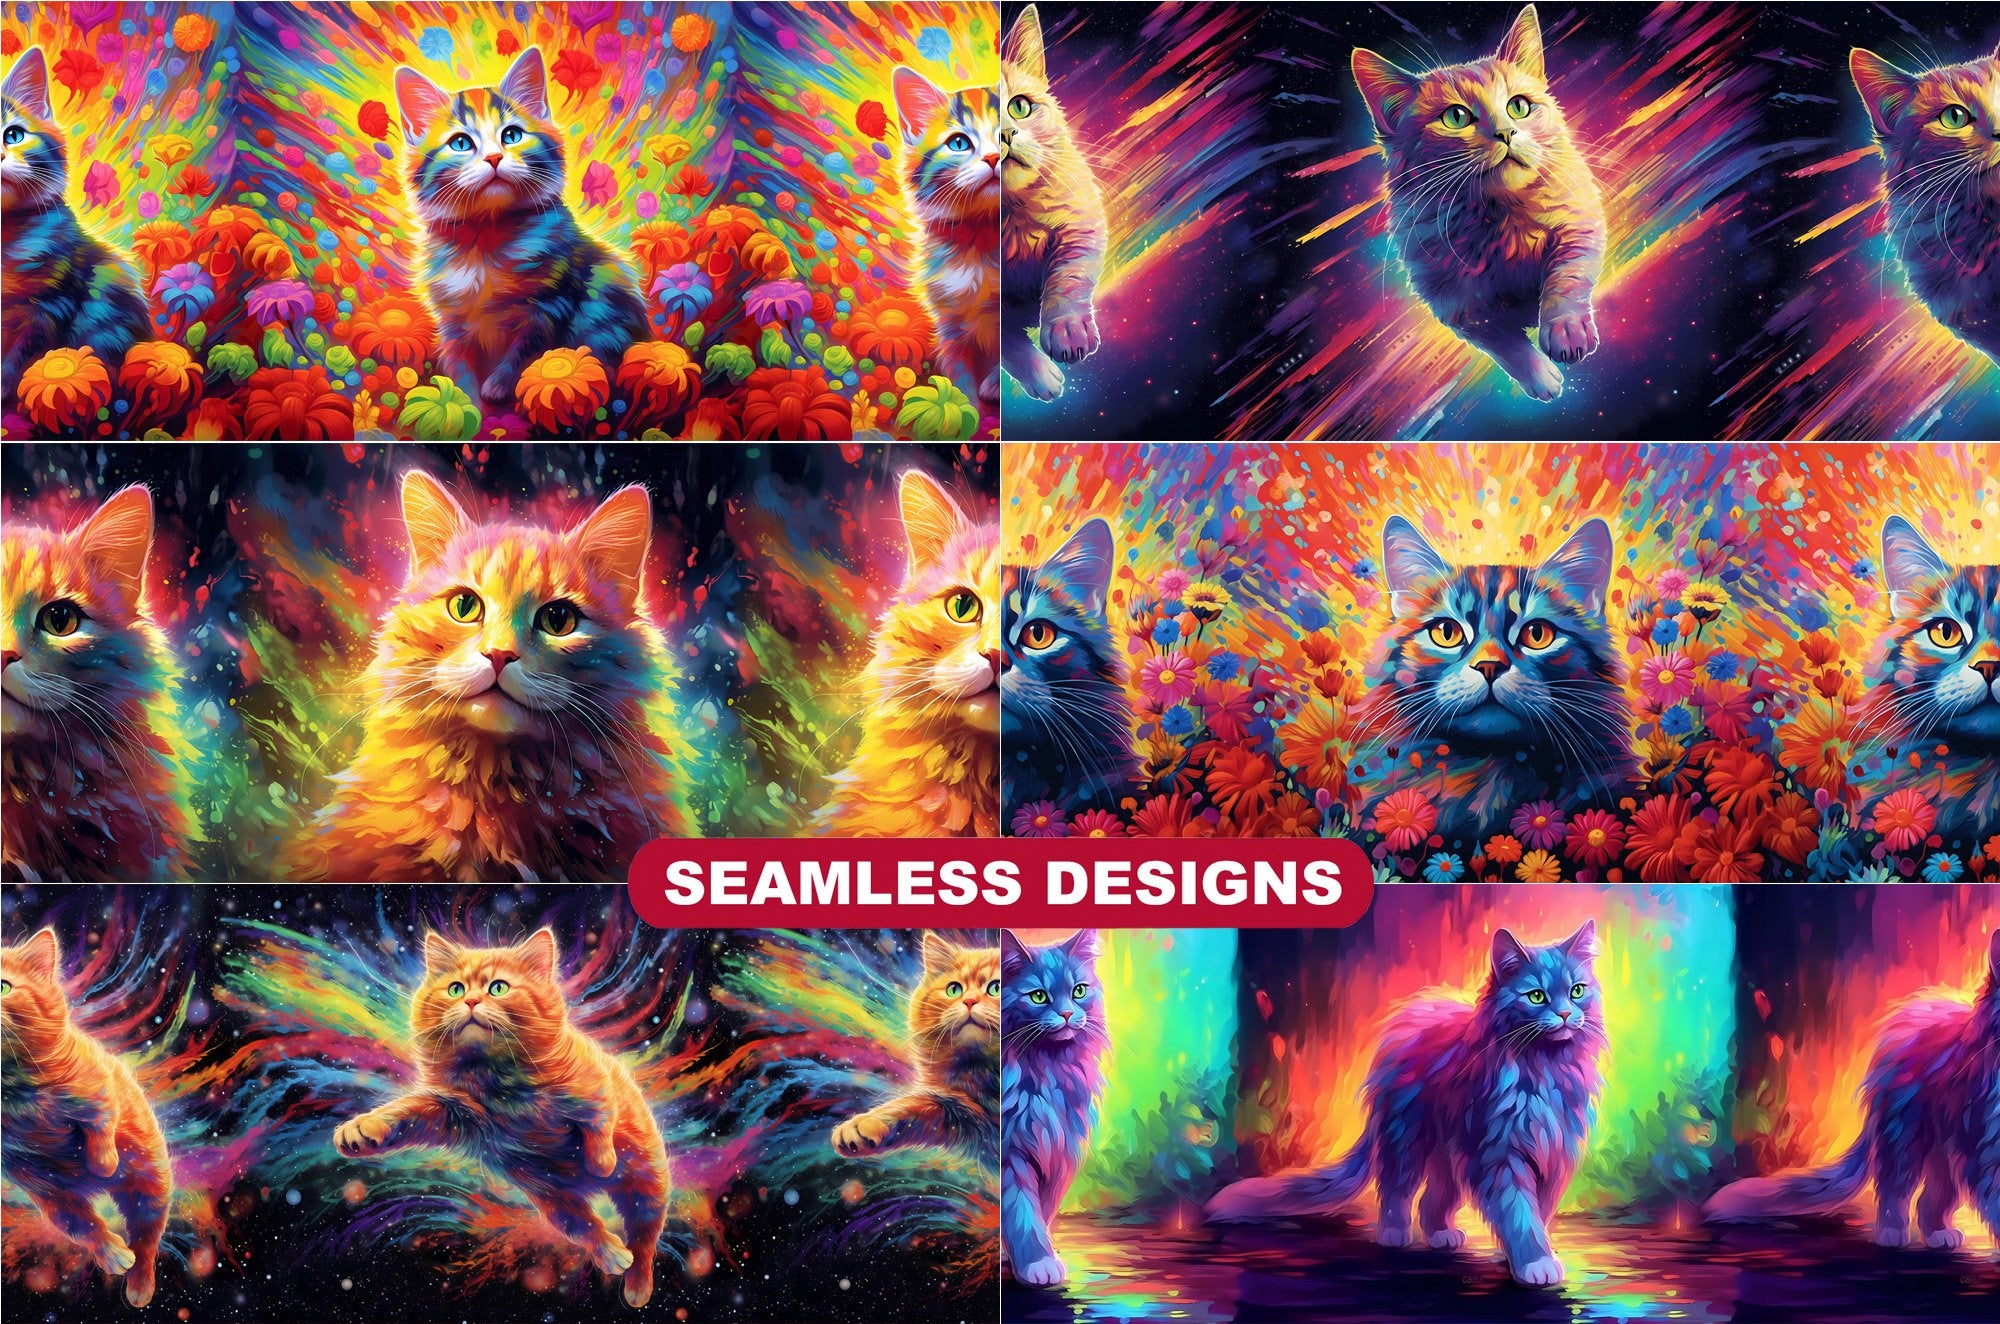 Rainbow Cats 2 Tumbler Wrap - CraftNest